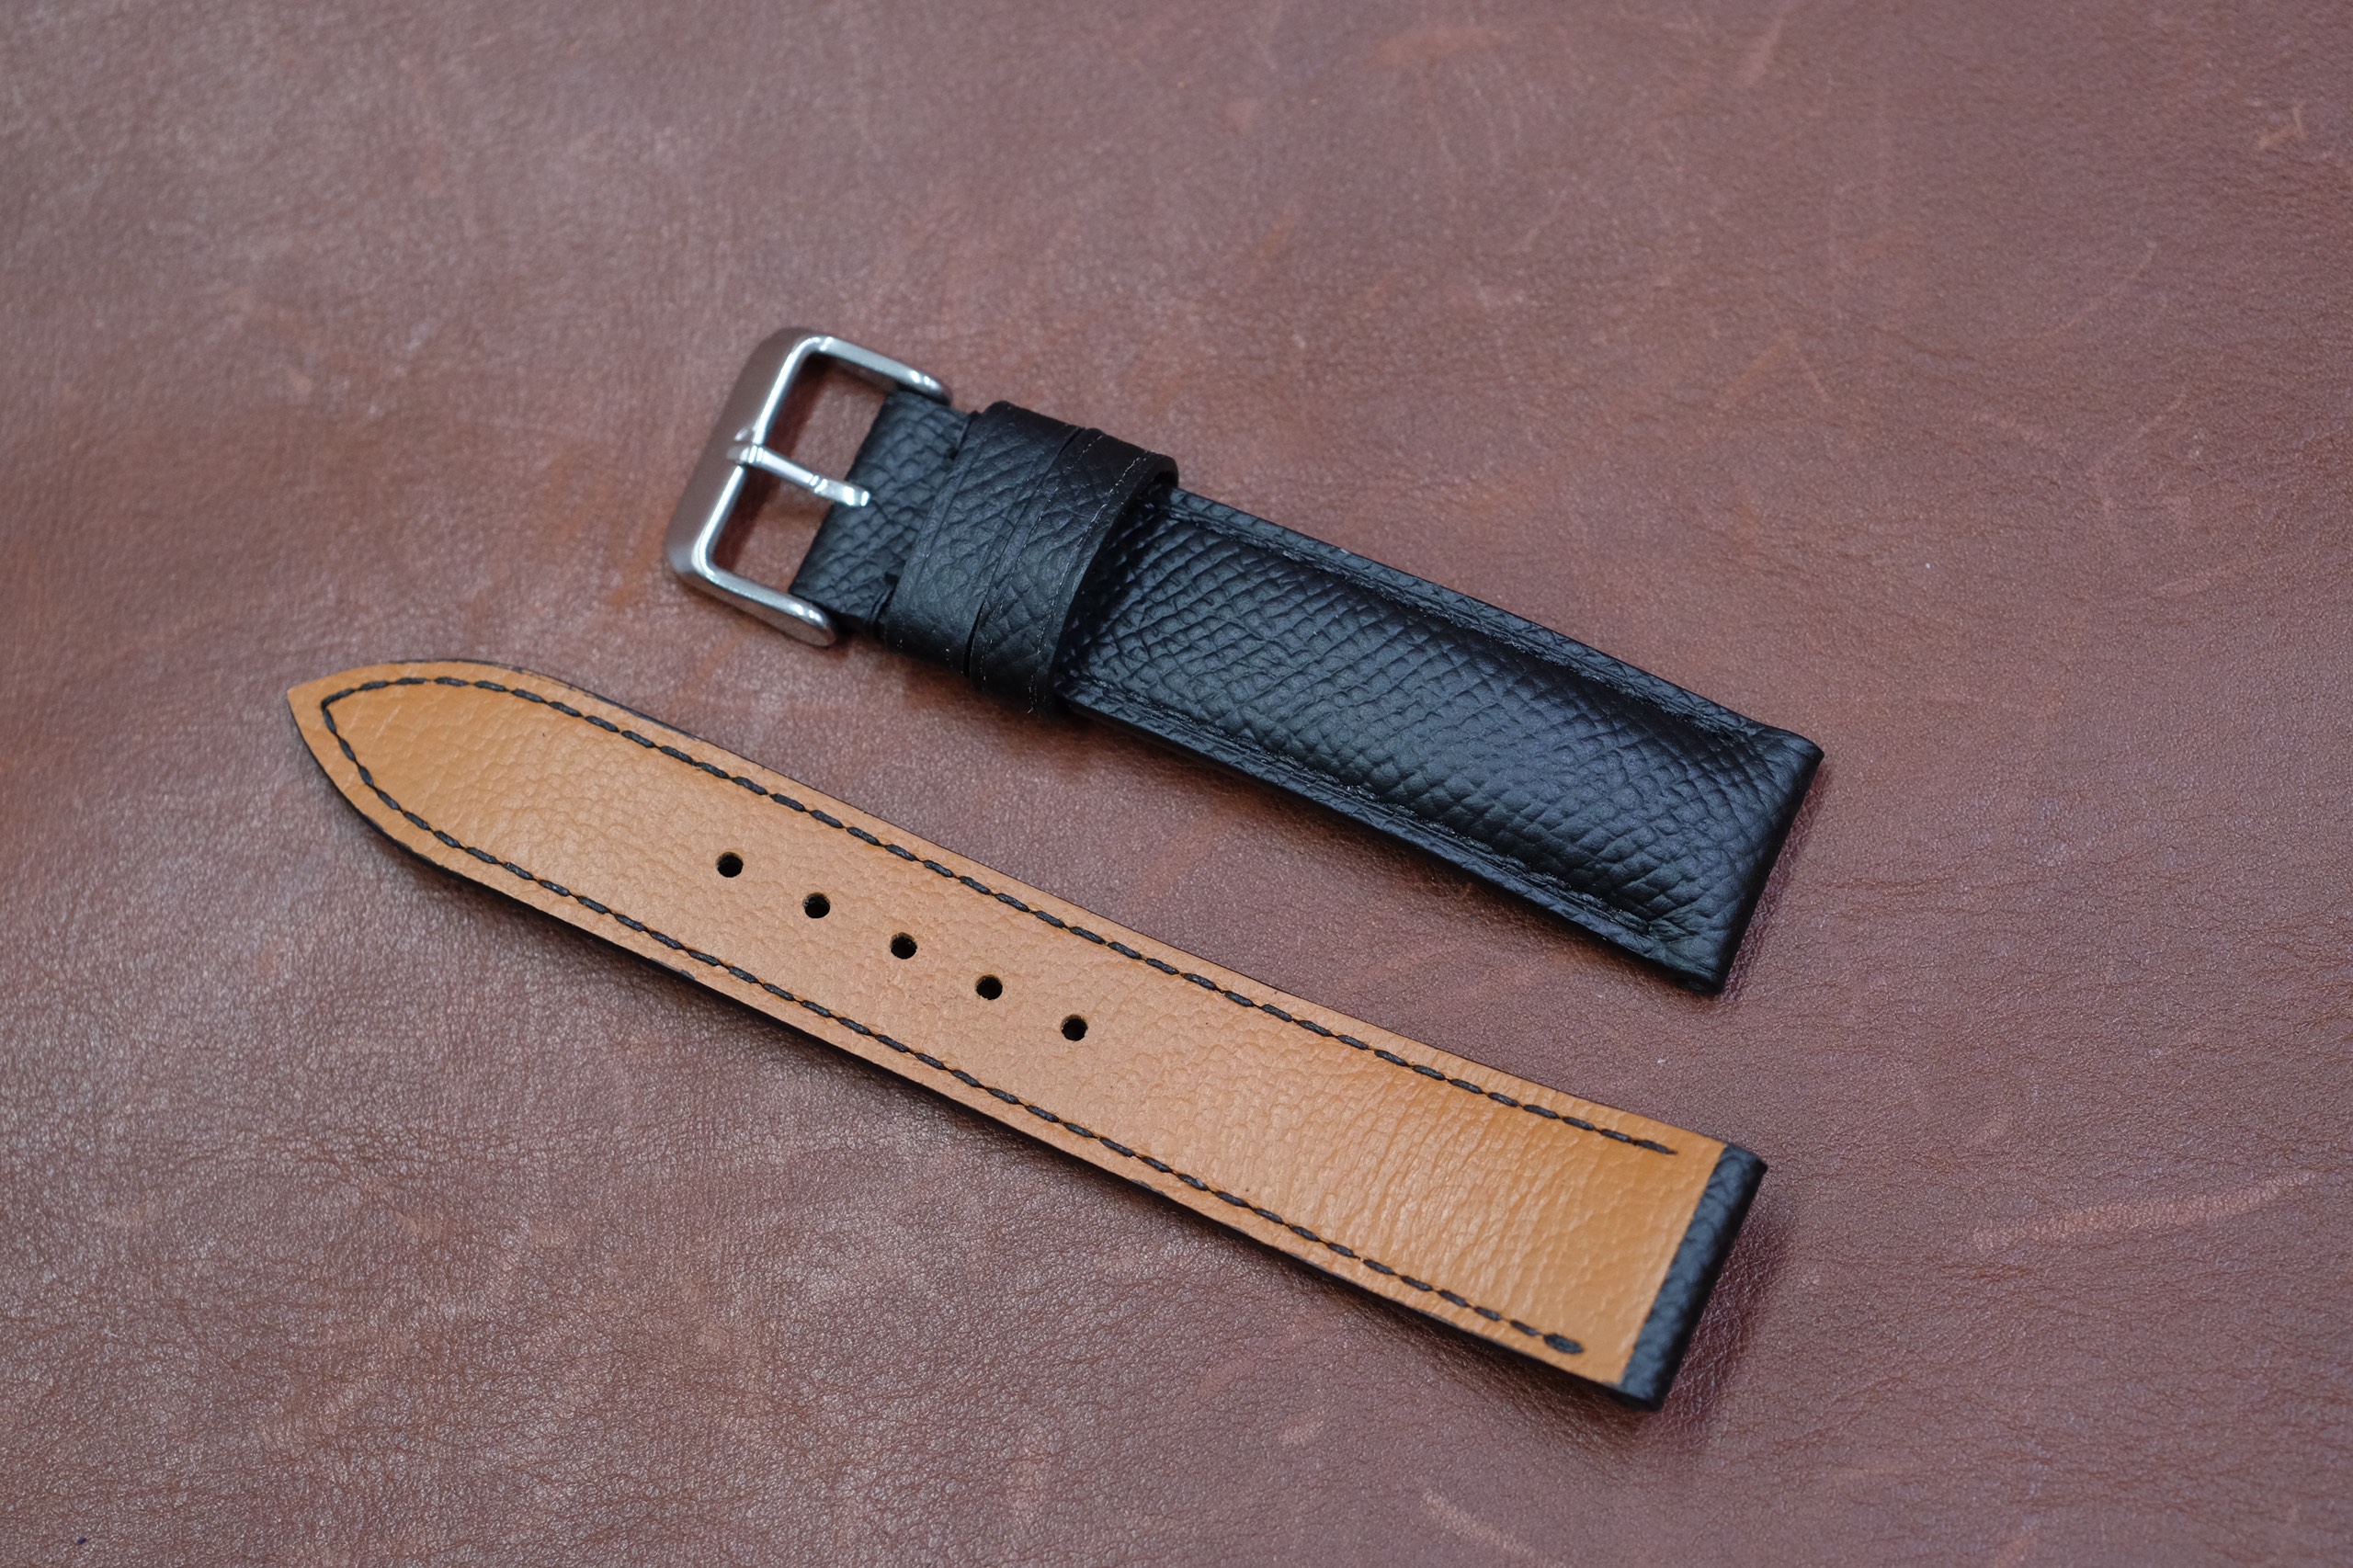 Epsom Black Leather Watch Strap